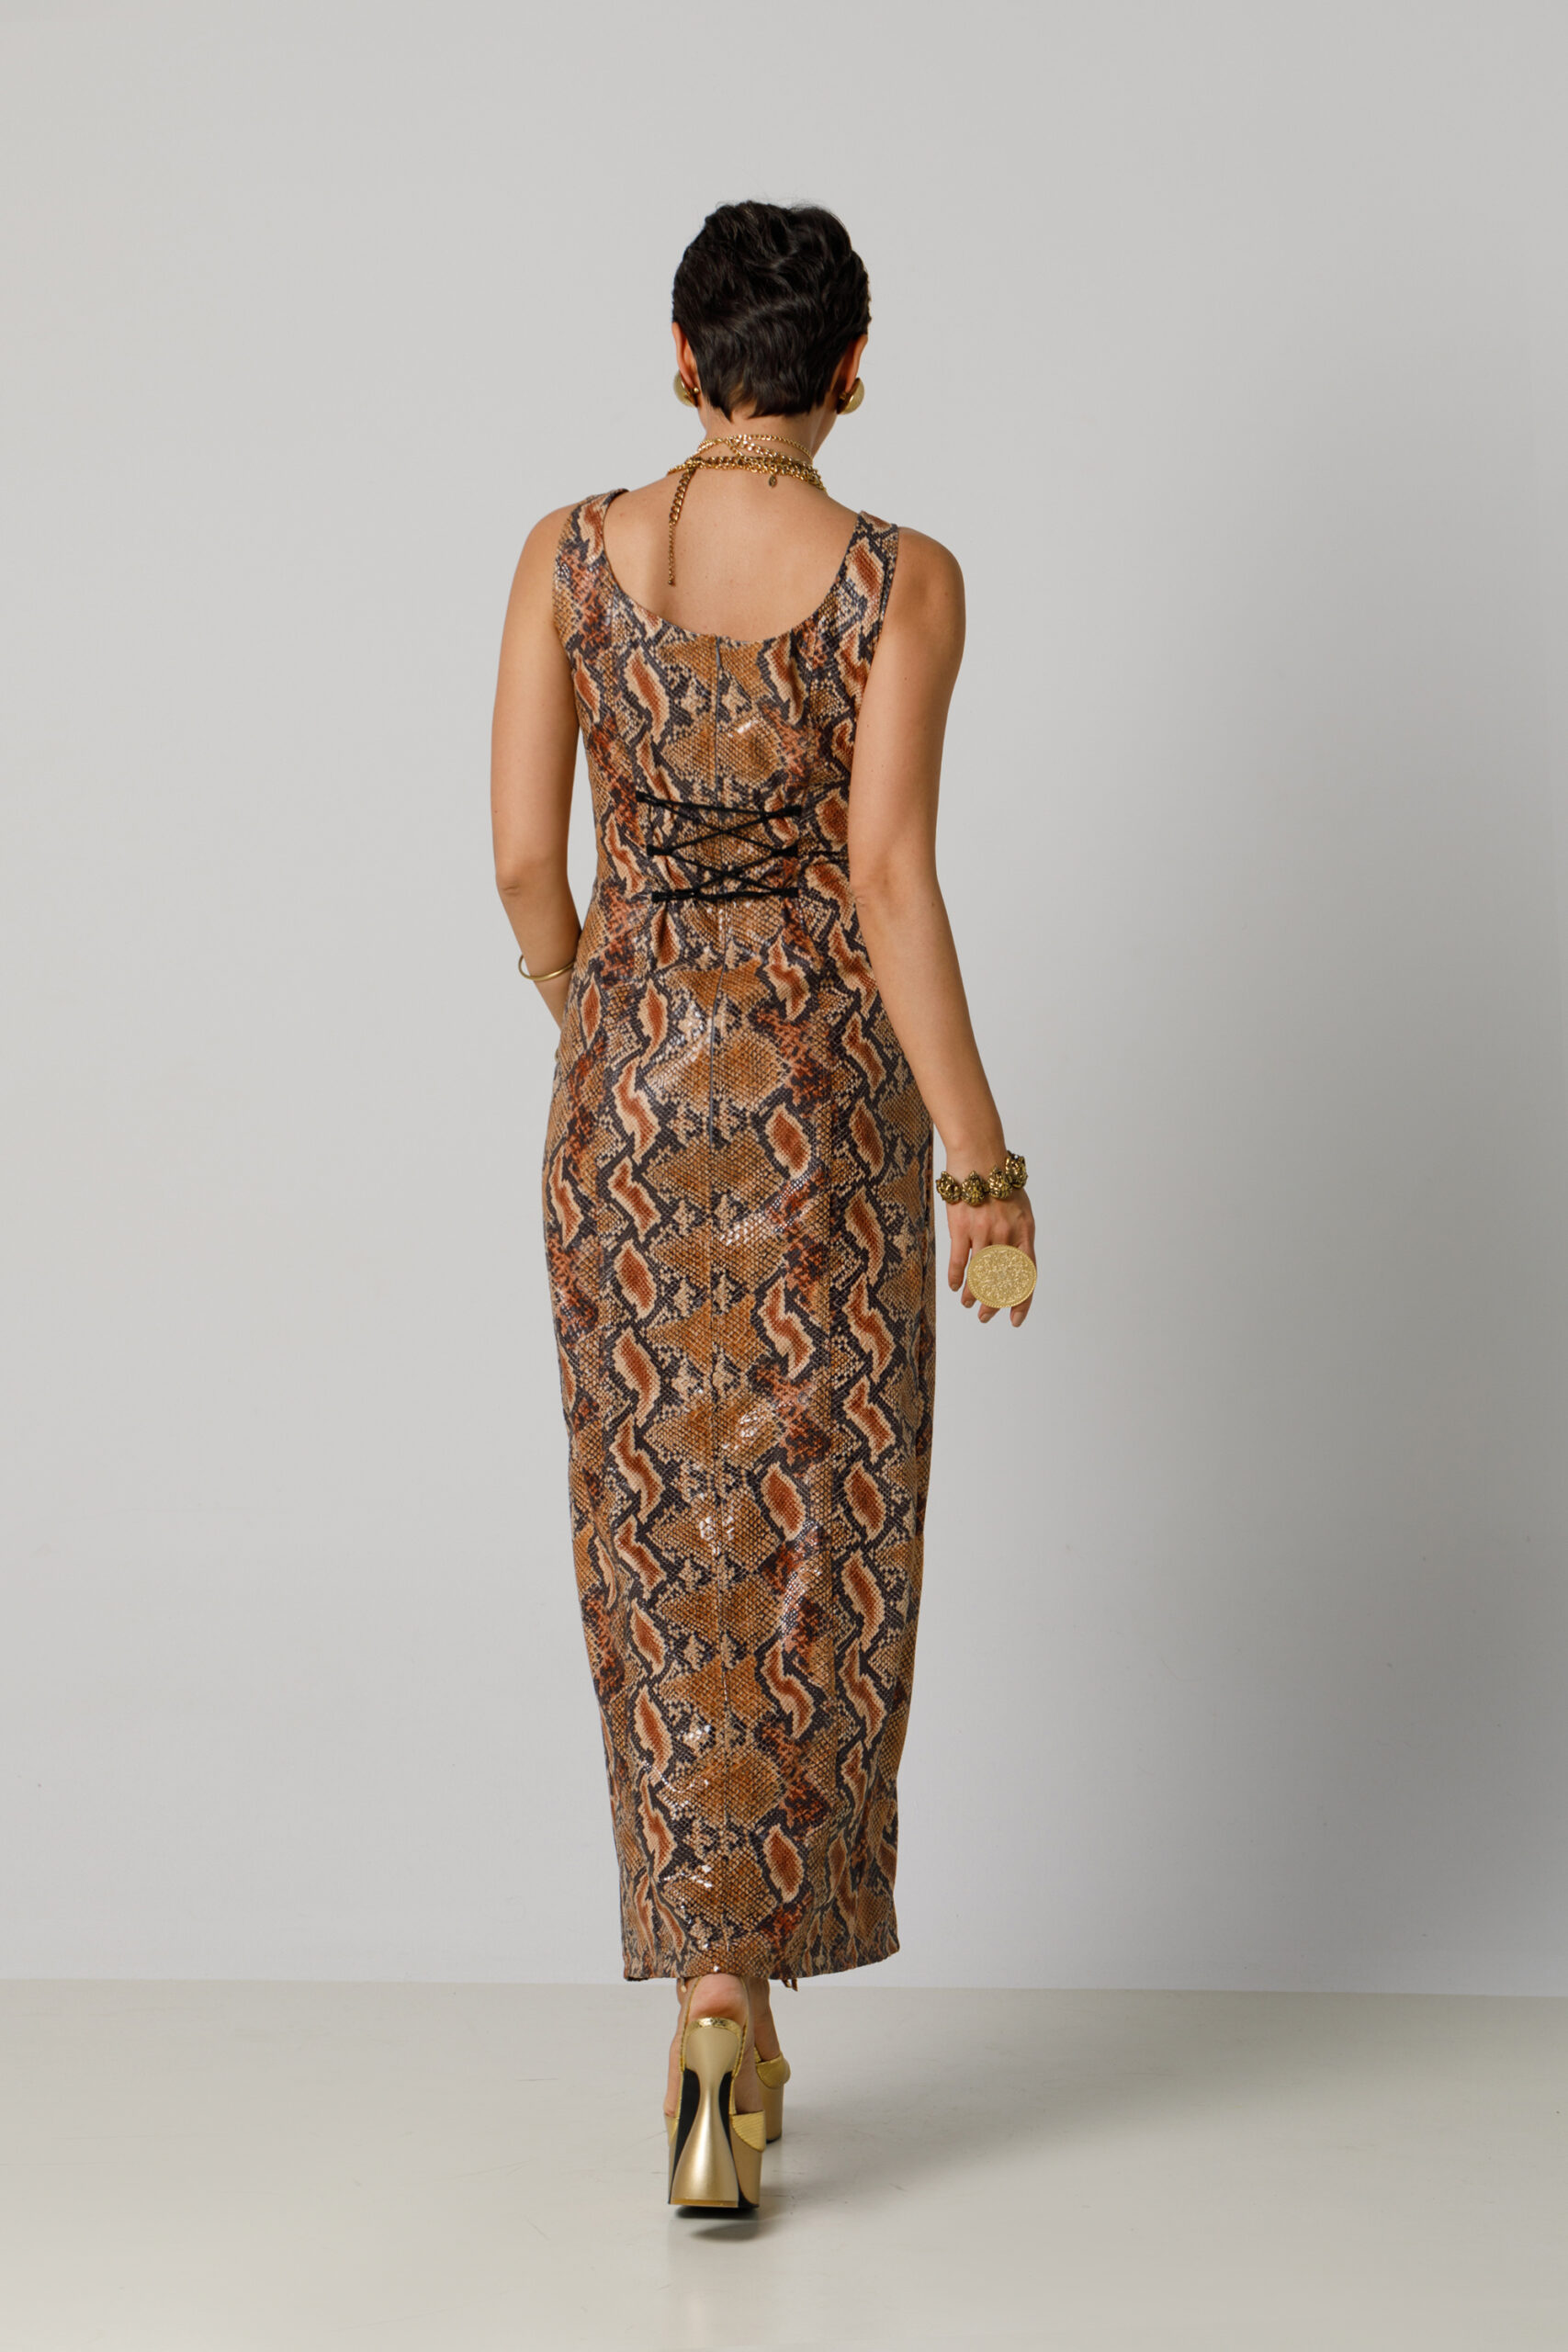 NOELIA Elegant snakeskin dress. Natural fabrics, original design, handmade embroidery